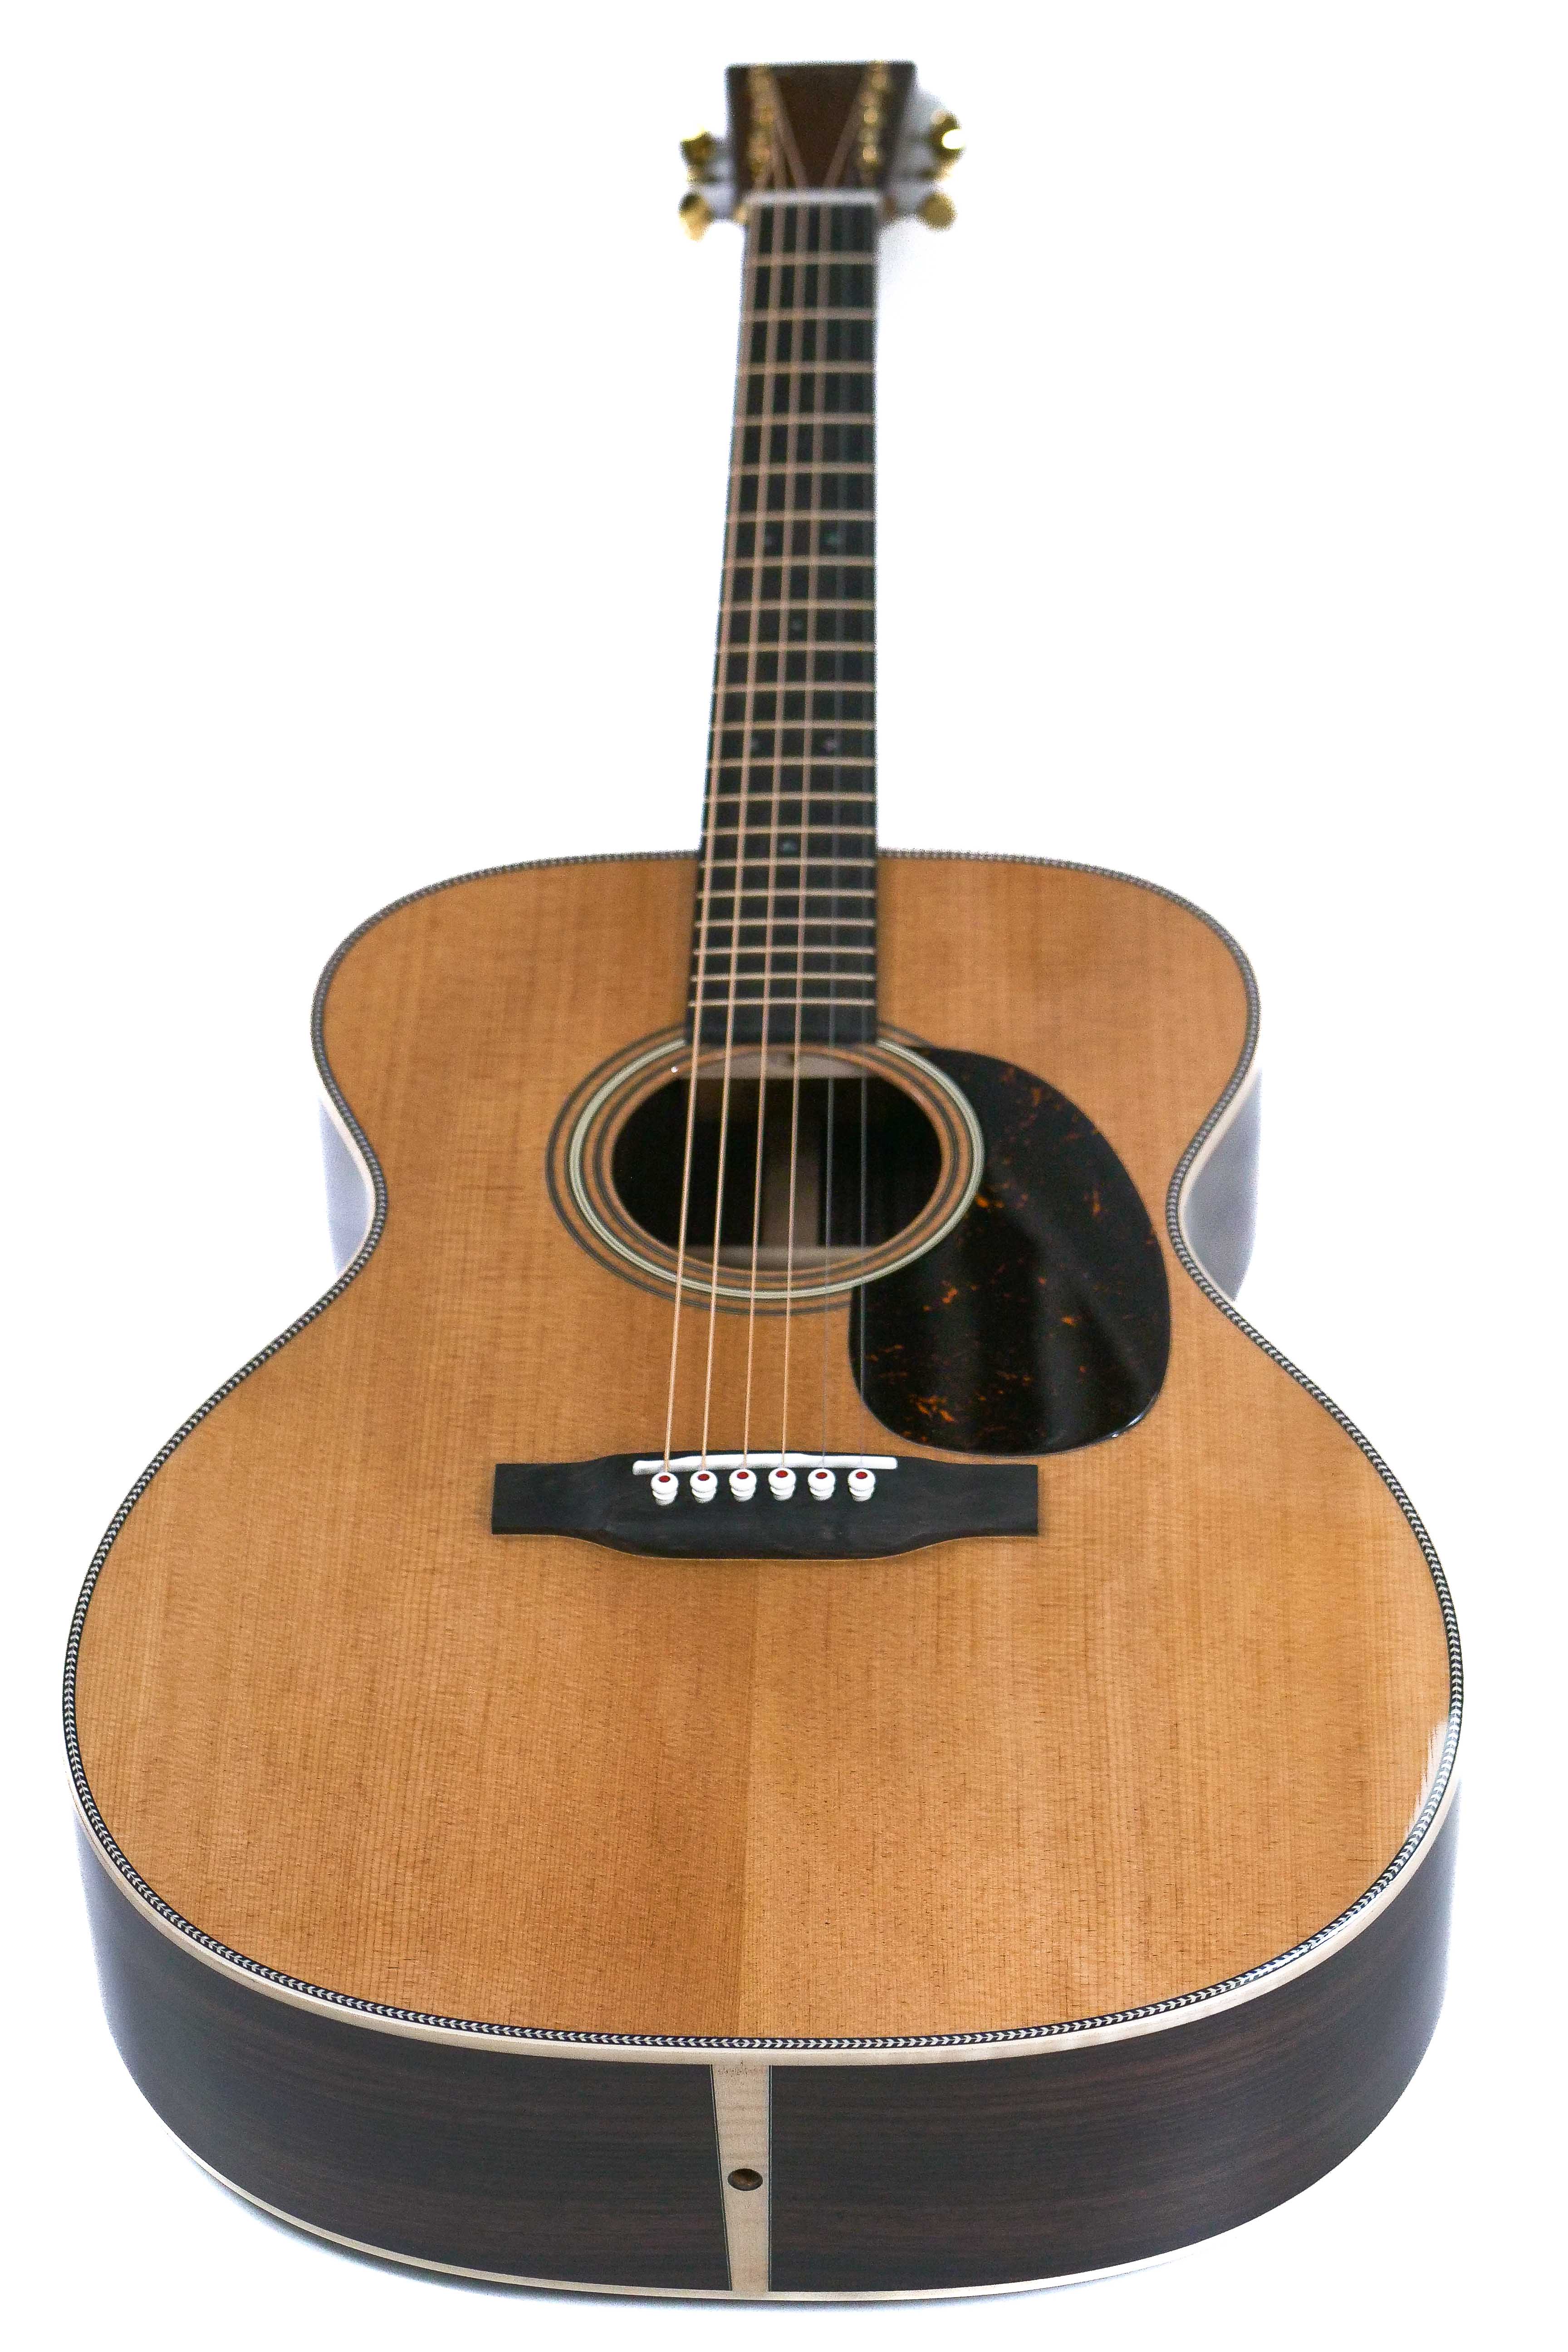 Martin 000-28 Modern Deluxe Acoustic Guitar